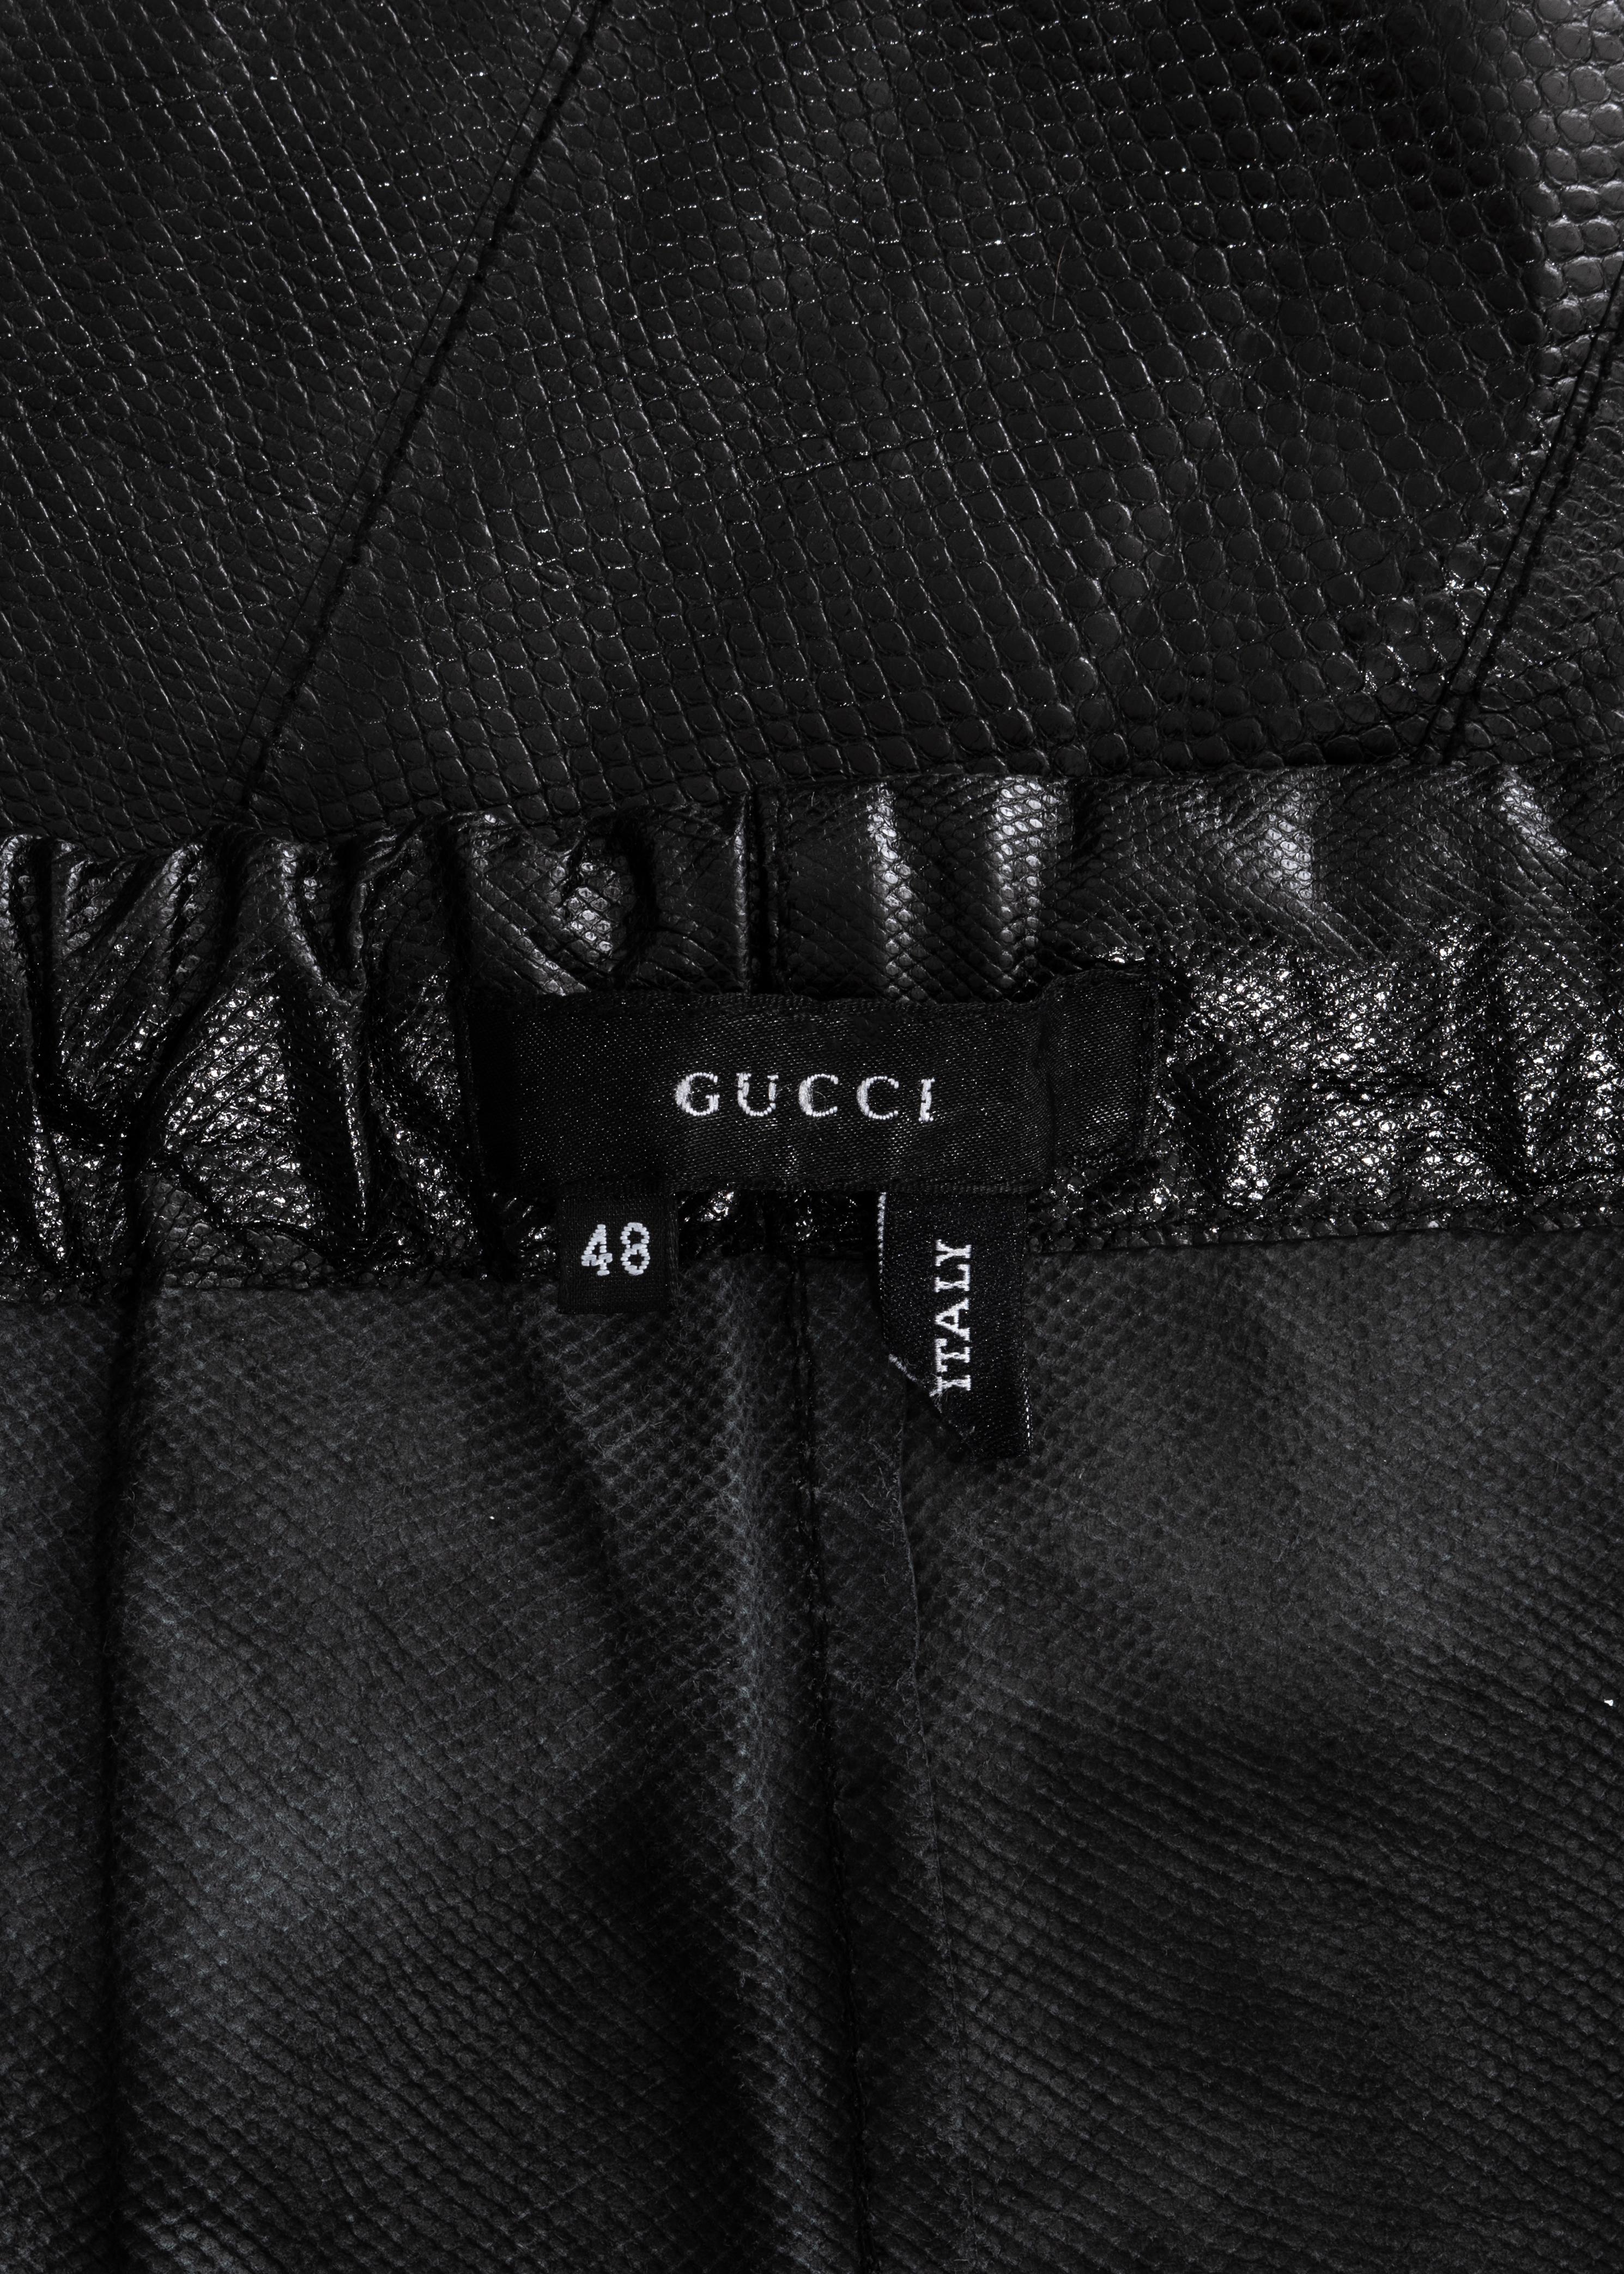 Men's Gucci by Tom Ford black lizard skin wide-leg pants, ss 2001 2